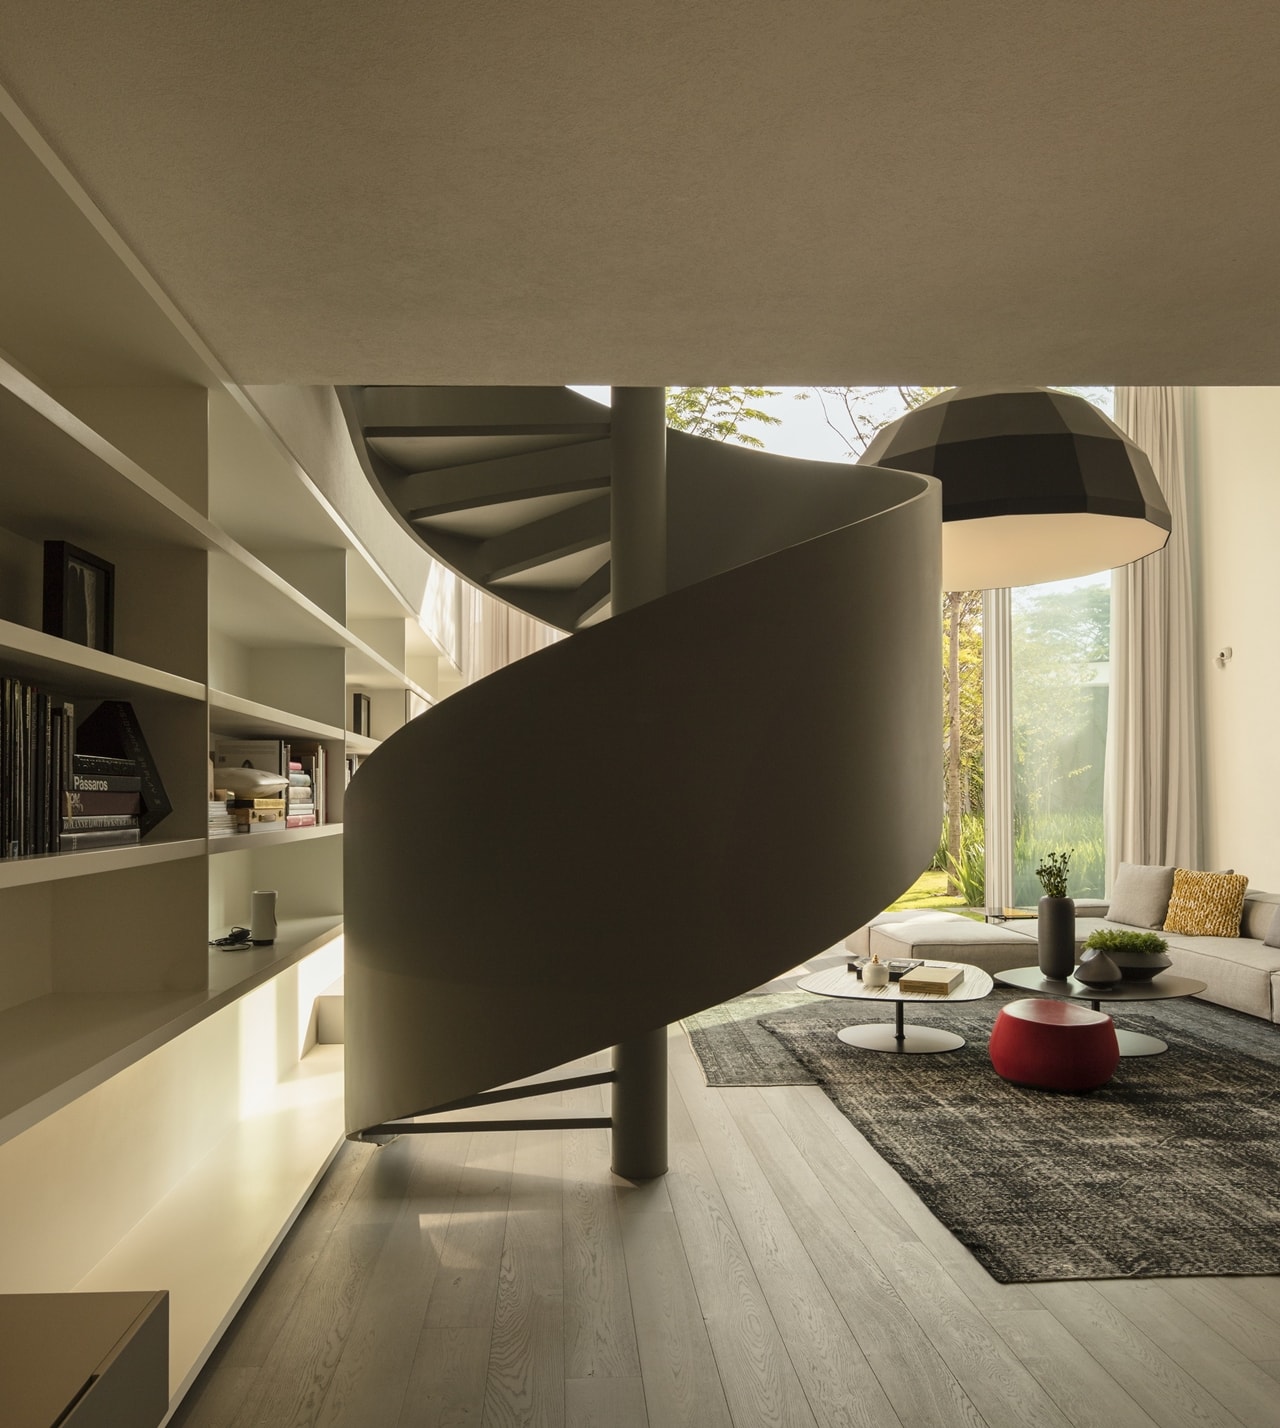 Circular staircase designed by studio Mk27 - Marcio Kogan + Lair Reis